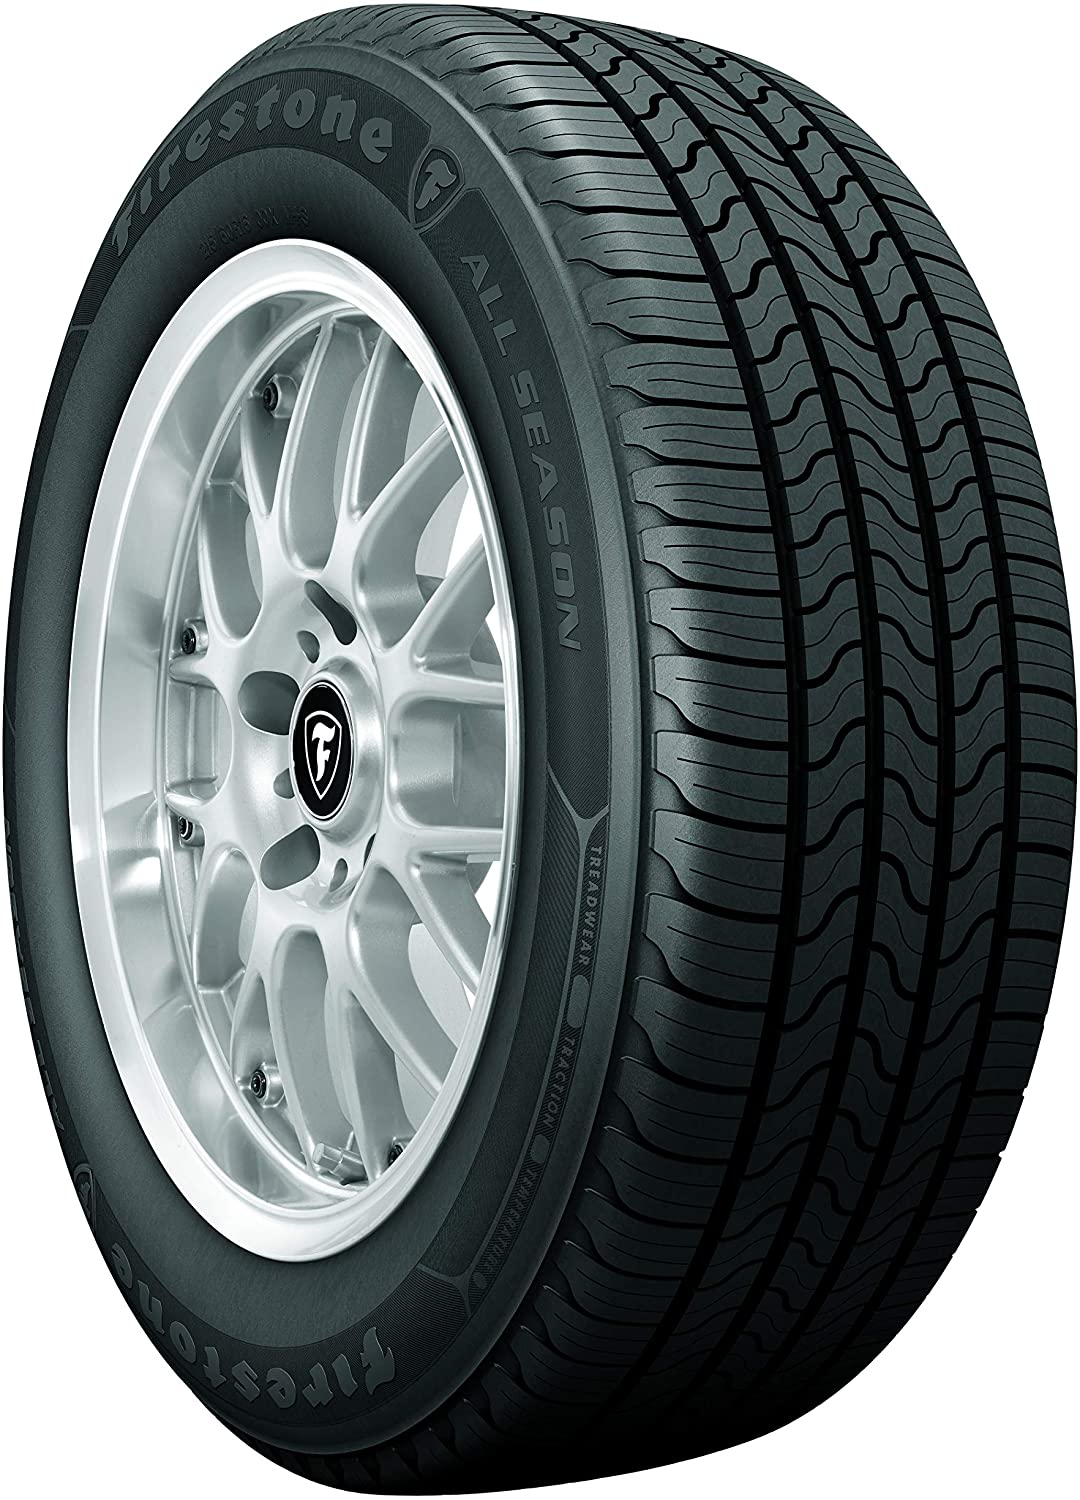 Firestone All-Season Radial Tires Review - Auto Quarterly